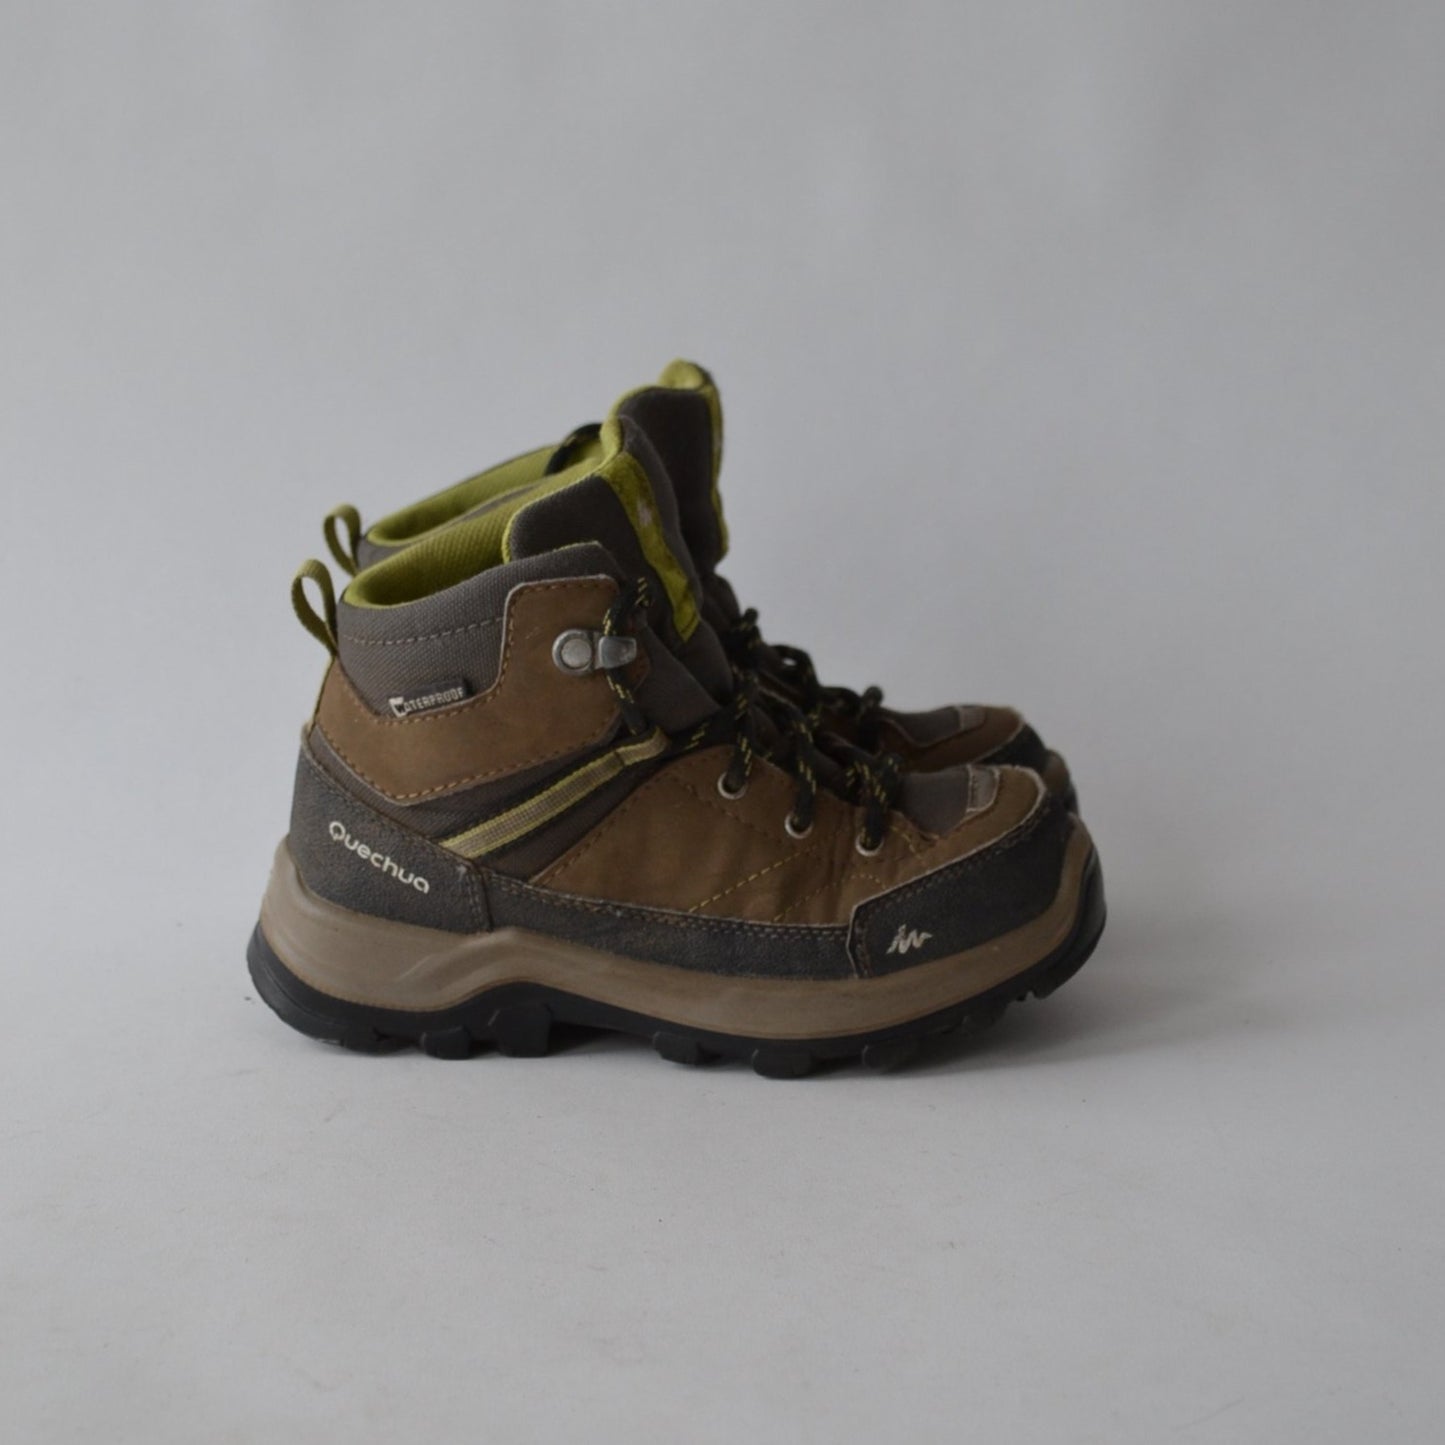 Quechua Brown Walking Boots Shoe Size 11.5 (jr)